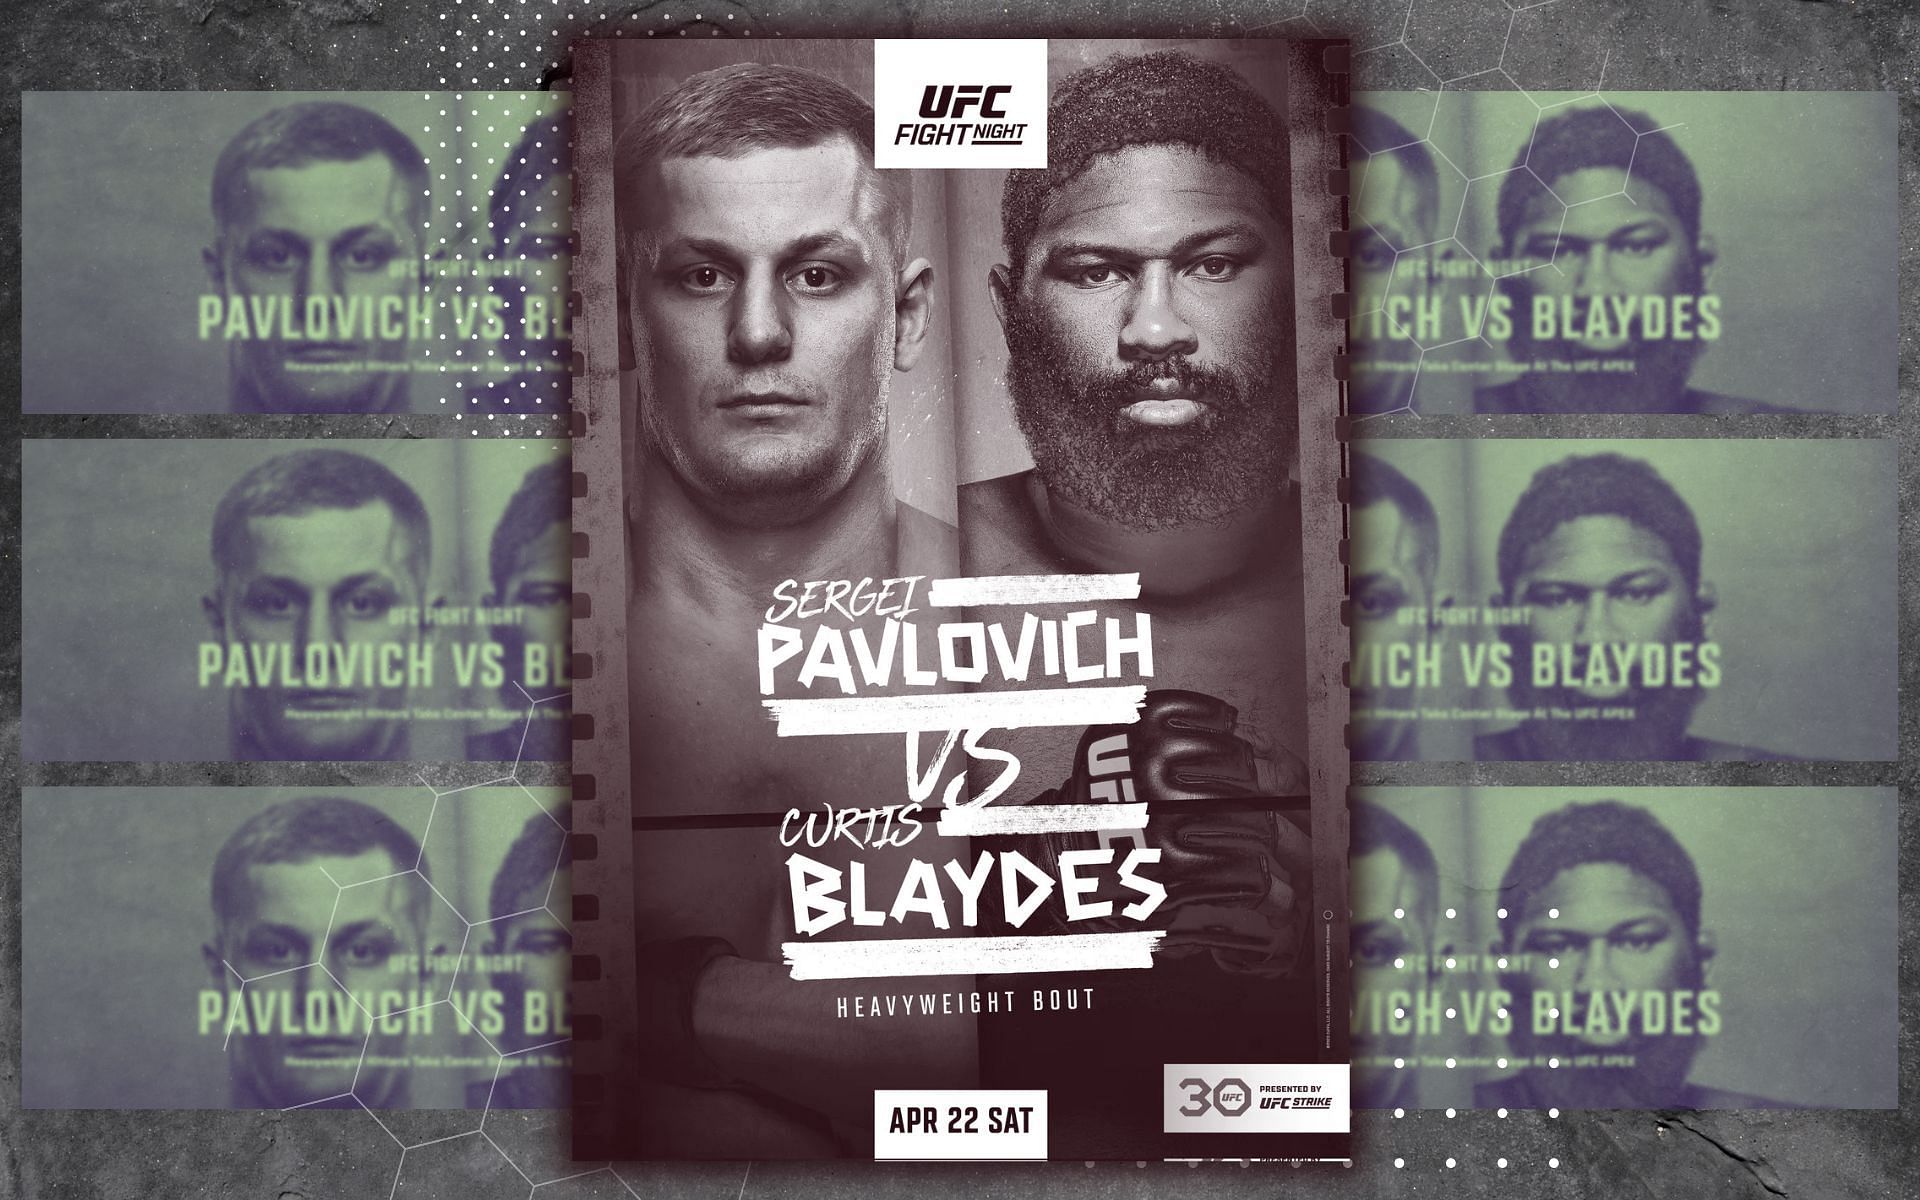 UFC Fight Night: Sergei Pavlovich vs Curtis Blaydes weigh-ins [Image credits: ufc.com]